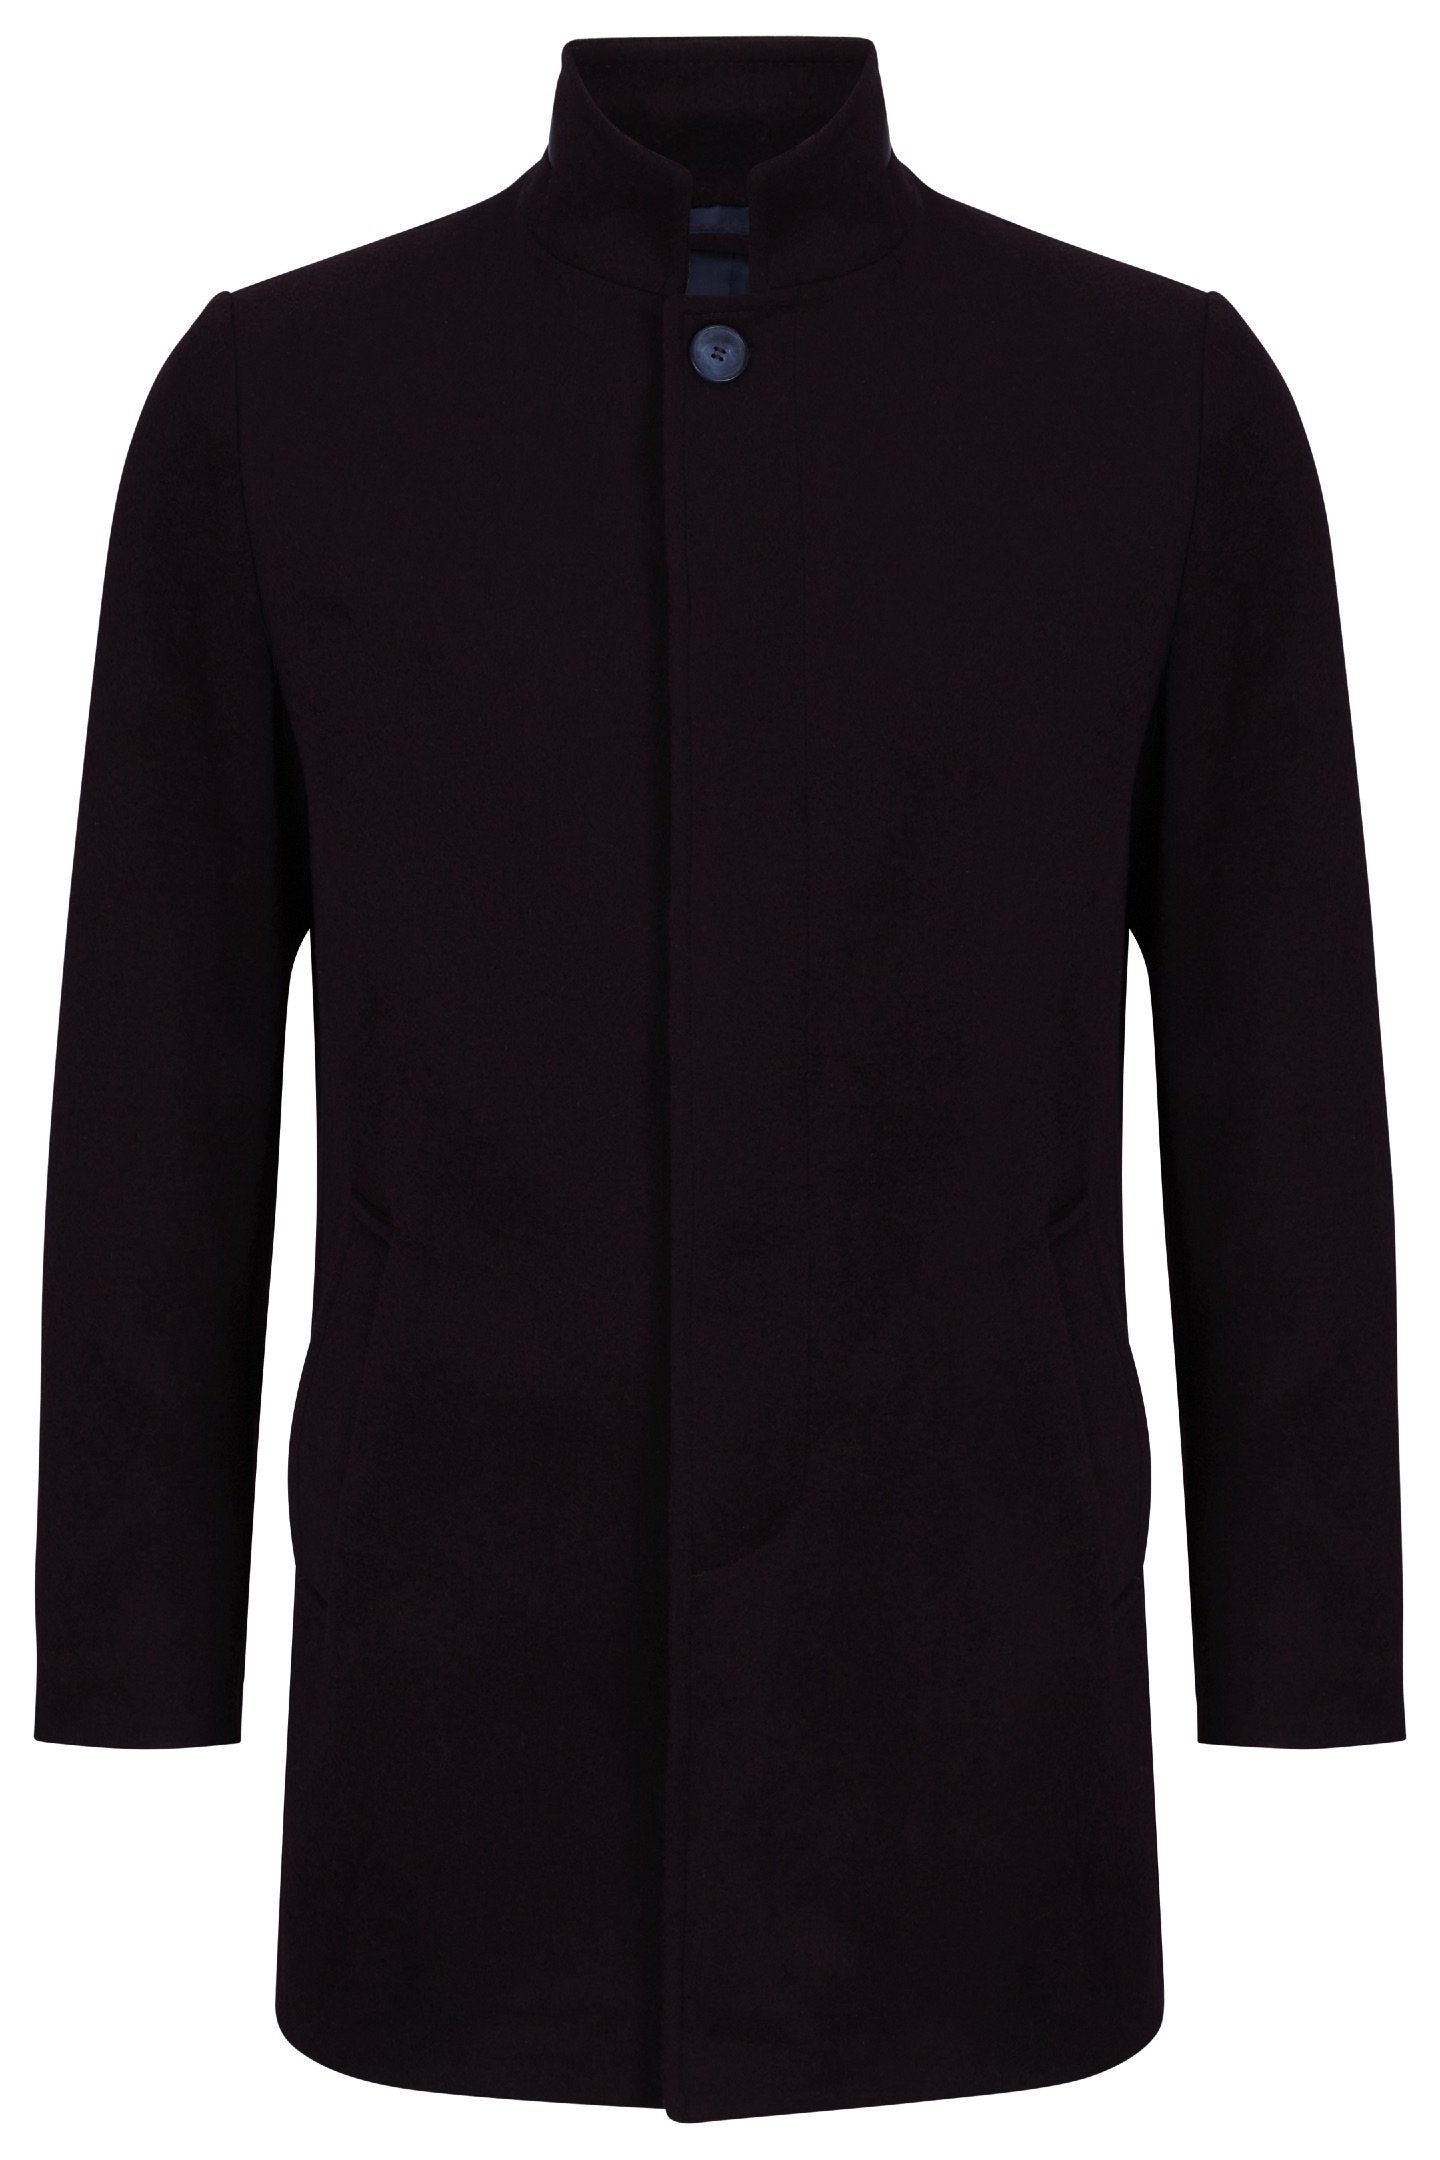 Men's Ely Wool Benetti Burgandy Jacket- Full view